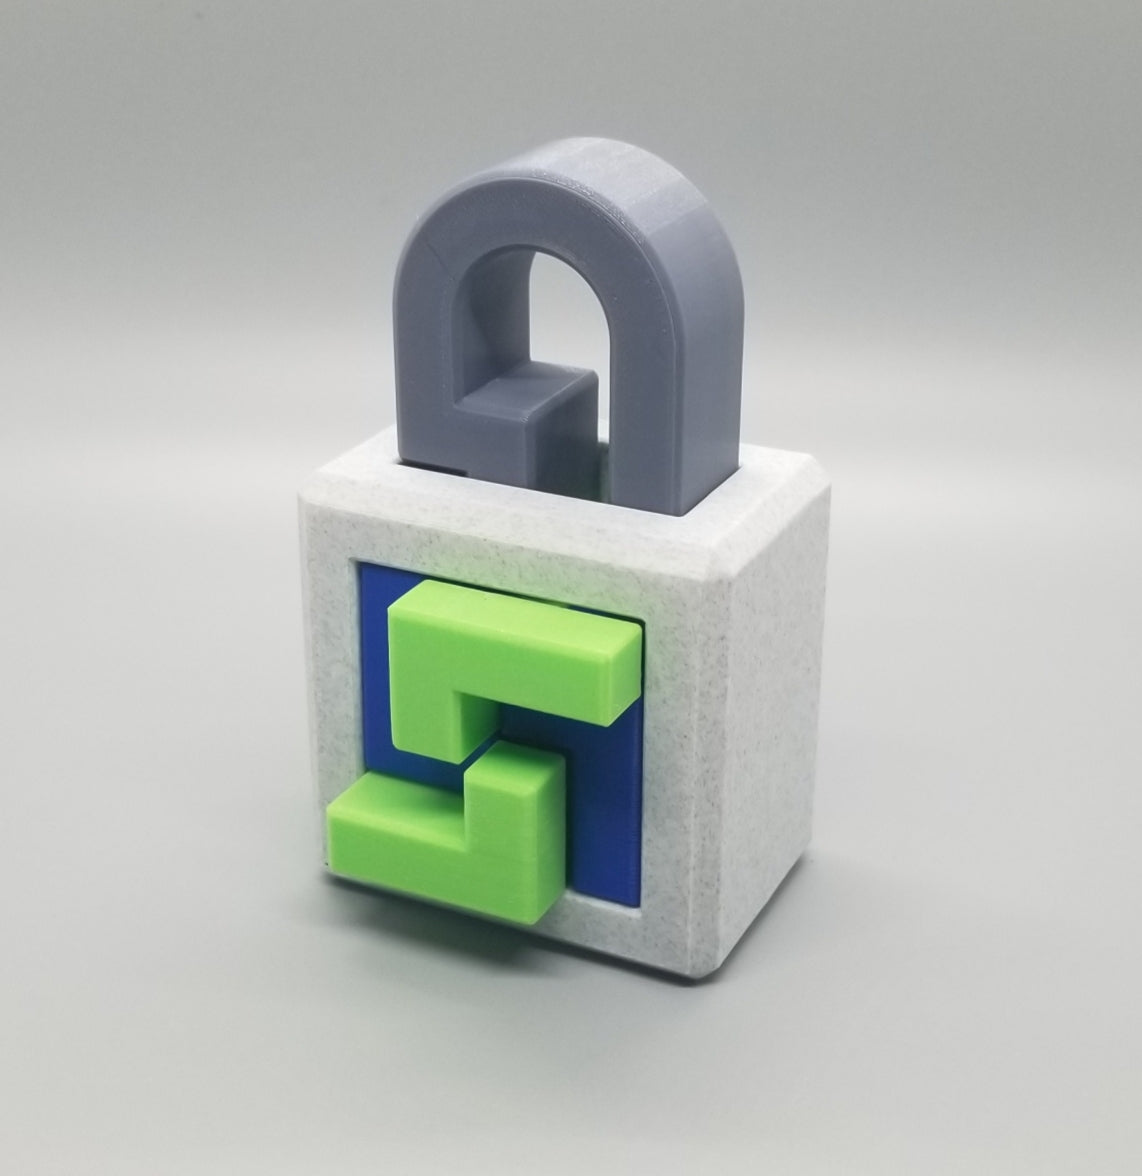 Spiral Lock - Designed by Chris Lohe